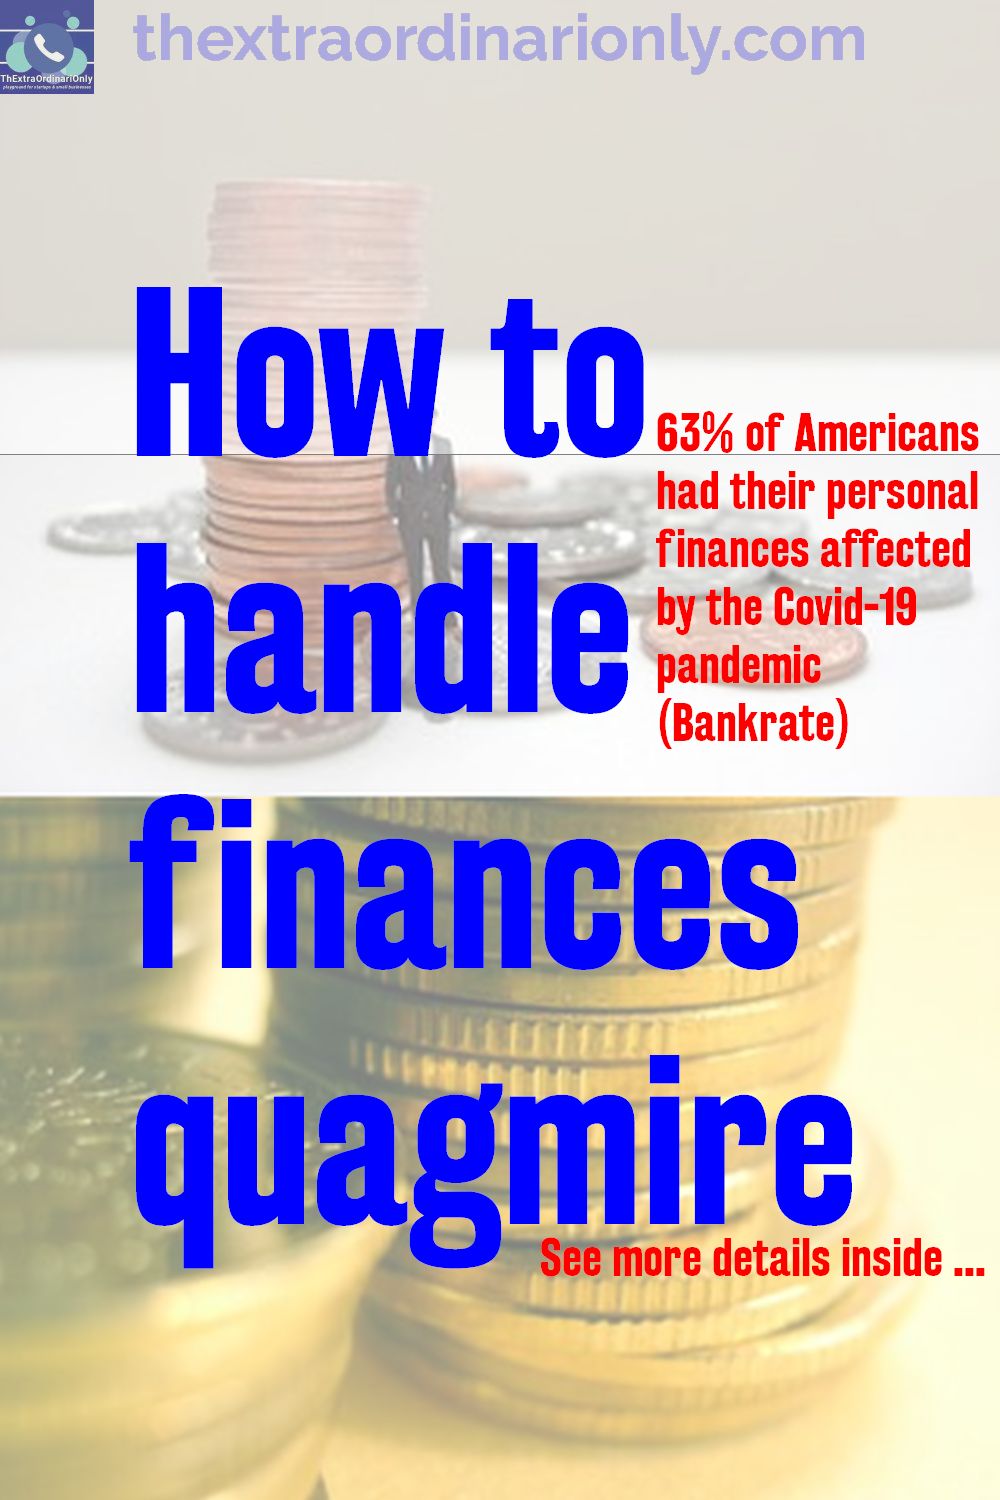 How to handle finances quagmire